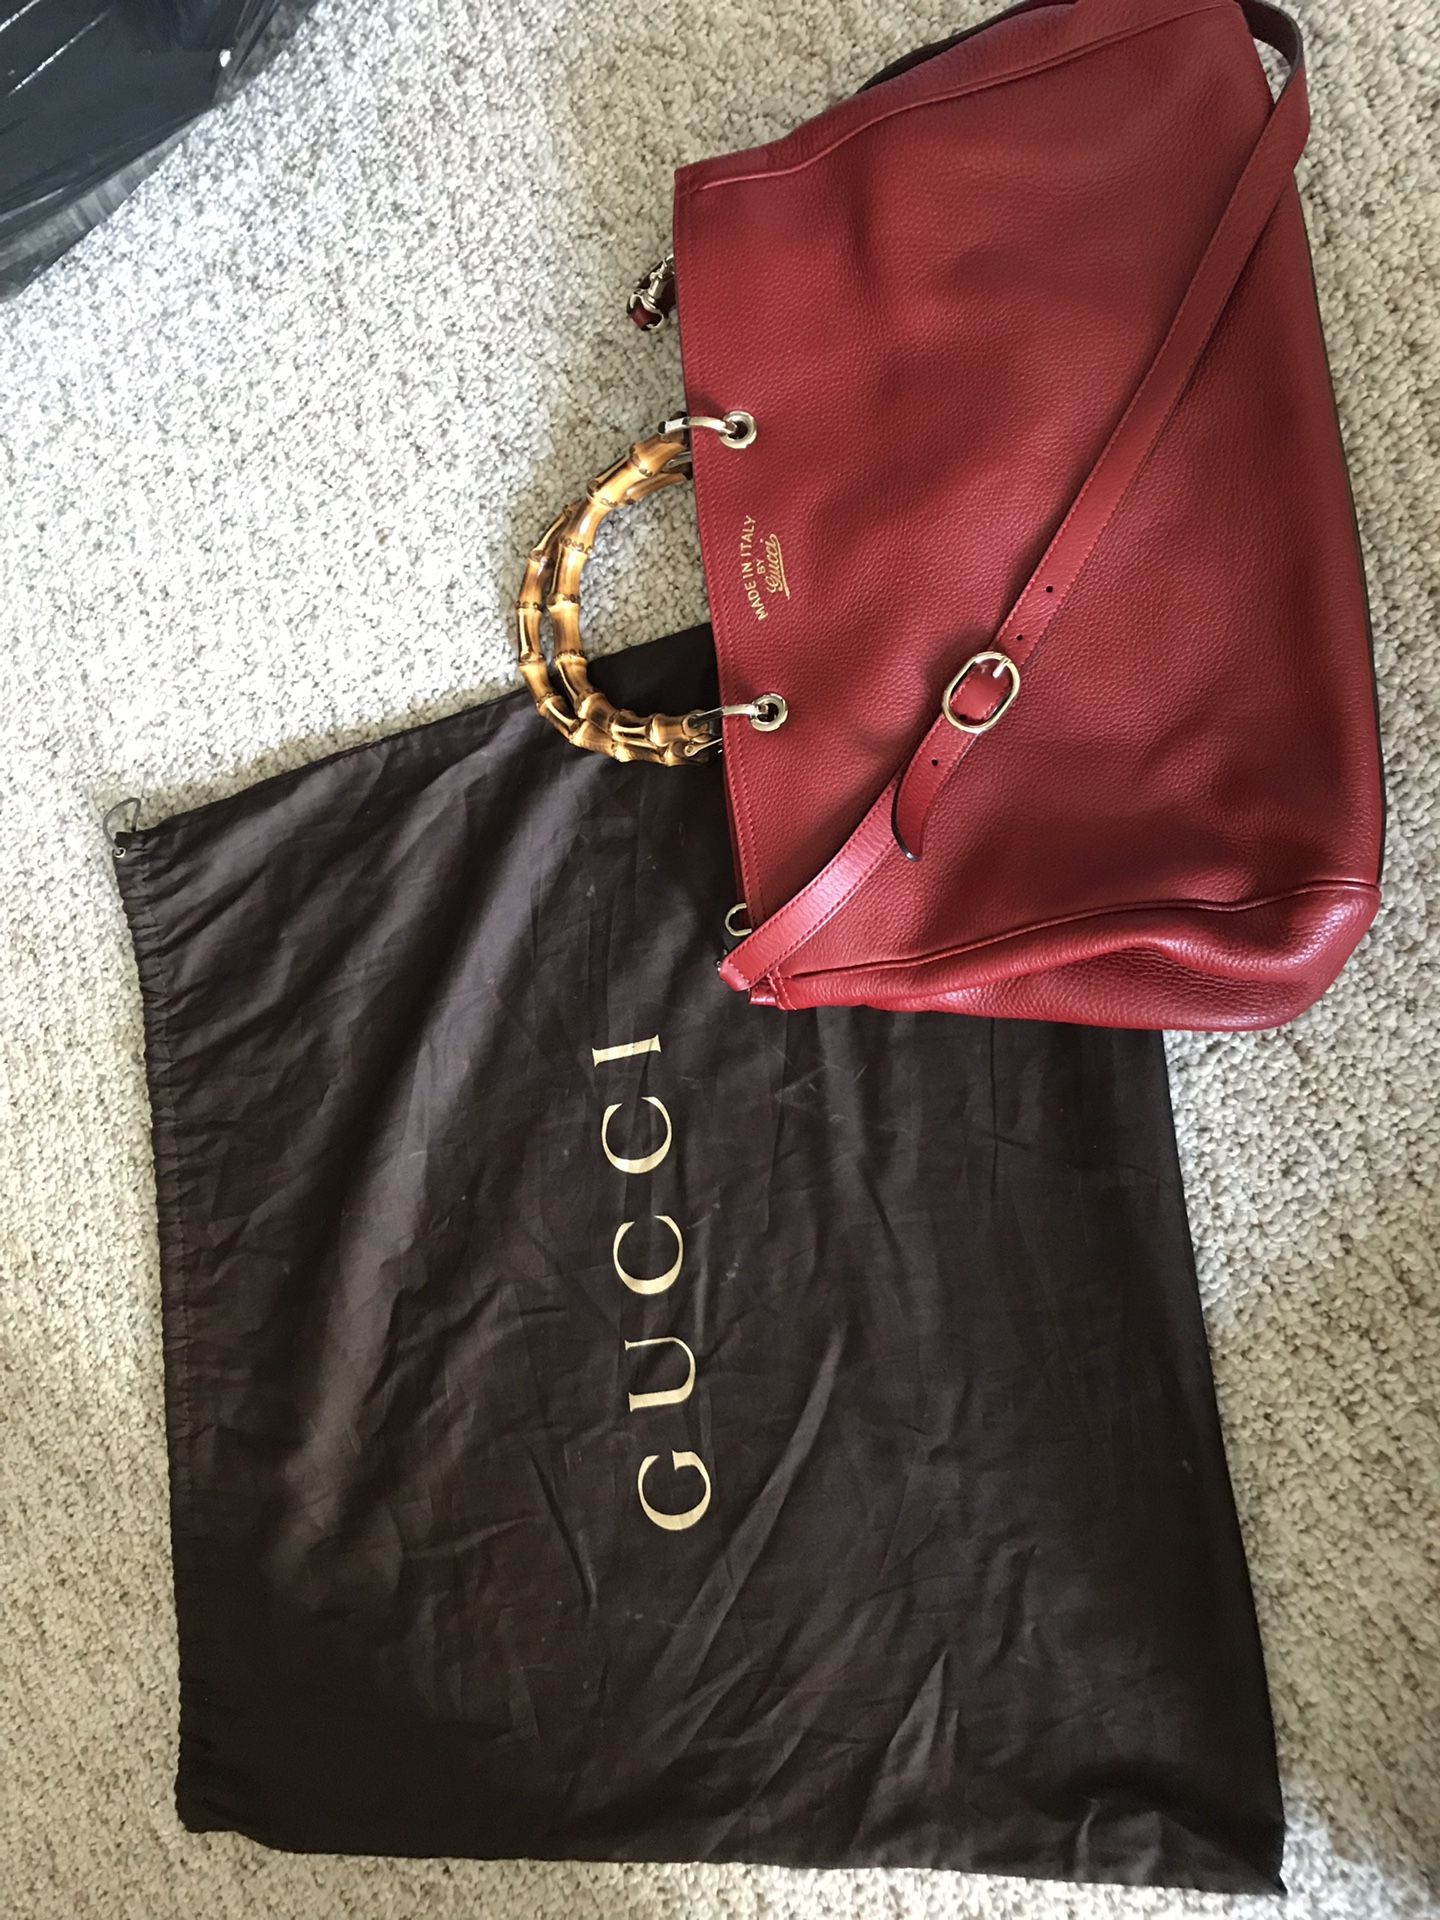 Genuine soft leather Gucci bag